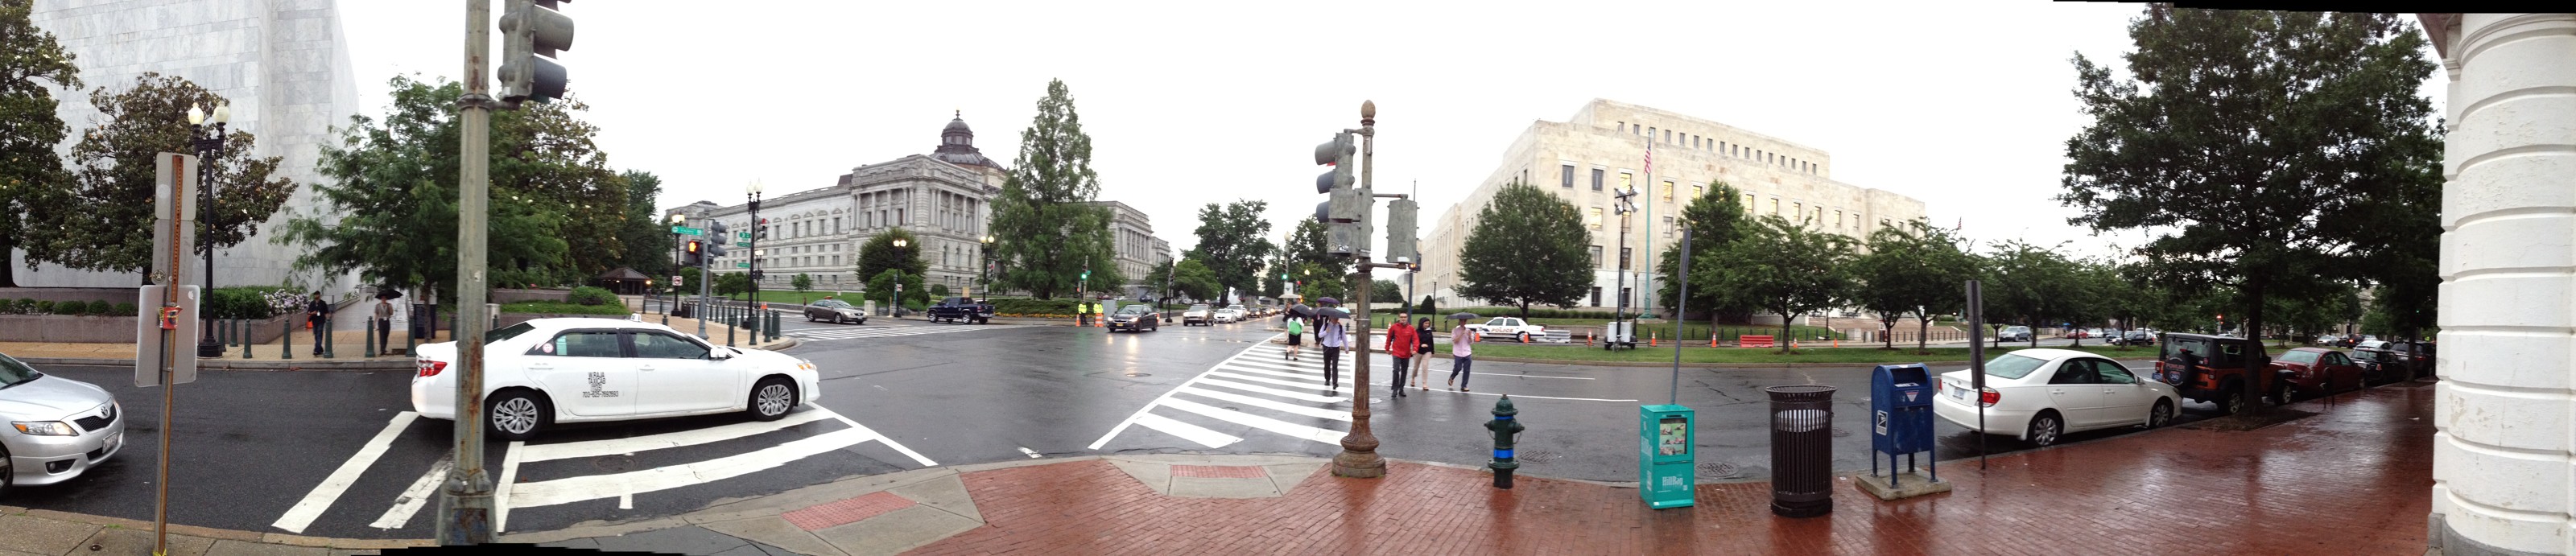 Washington DC 2013